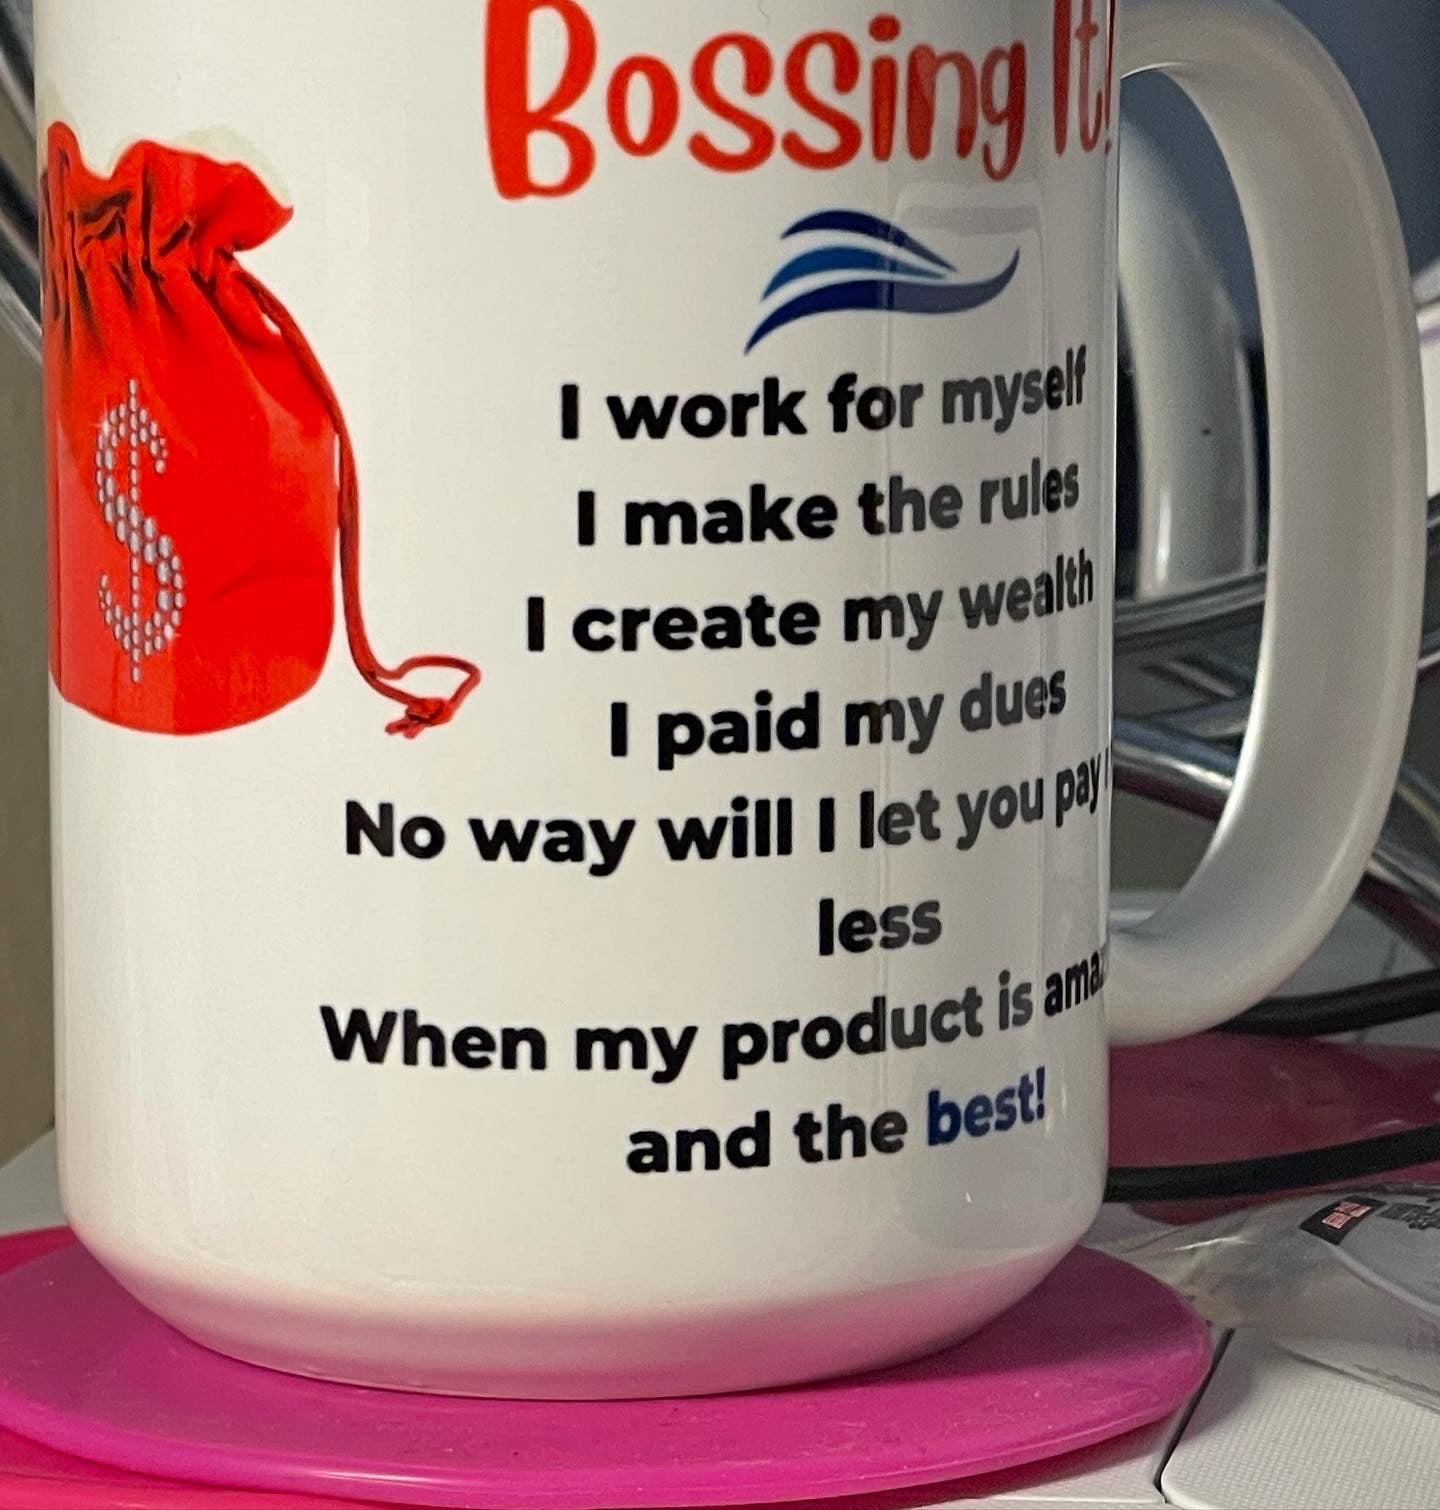 BOSSING IT (non personalized) 15oz mug